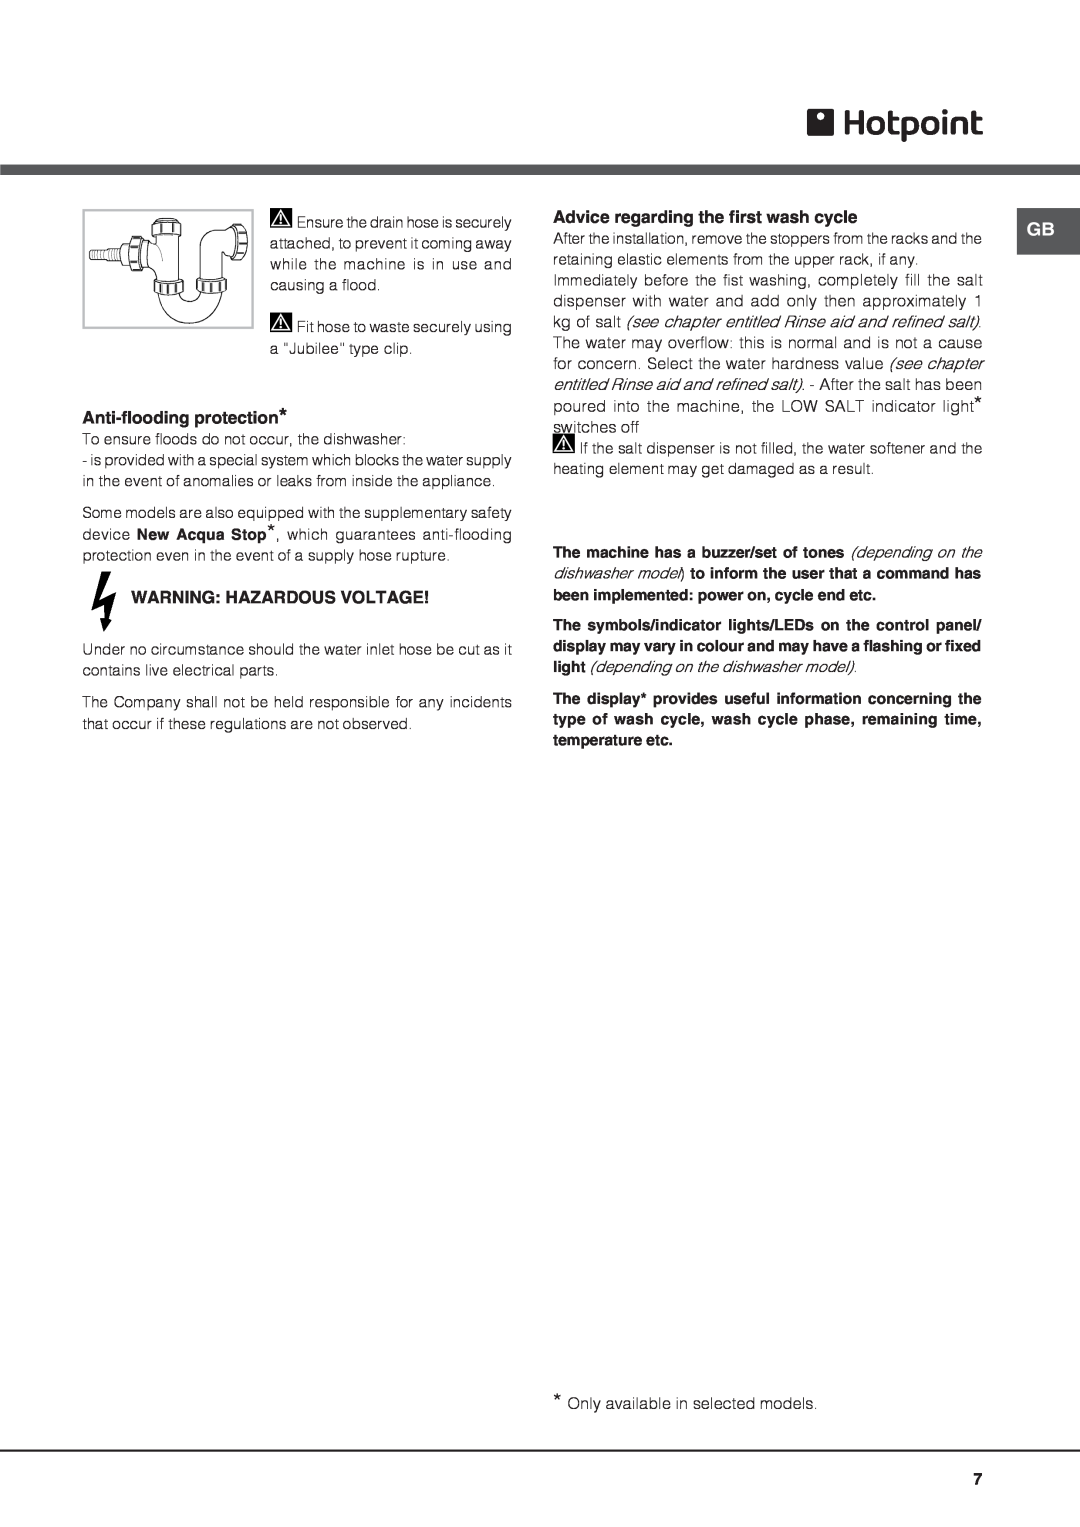 Hotpoint fdeb 31010 manual Anti-floodingprotection, Warning Hazardous Voltage, Advice regarding the first wash cycle 